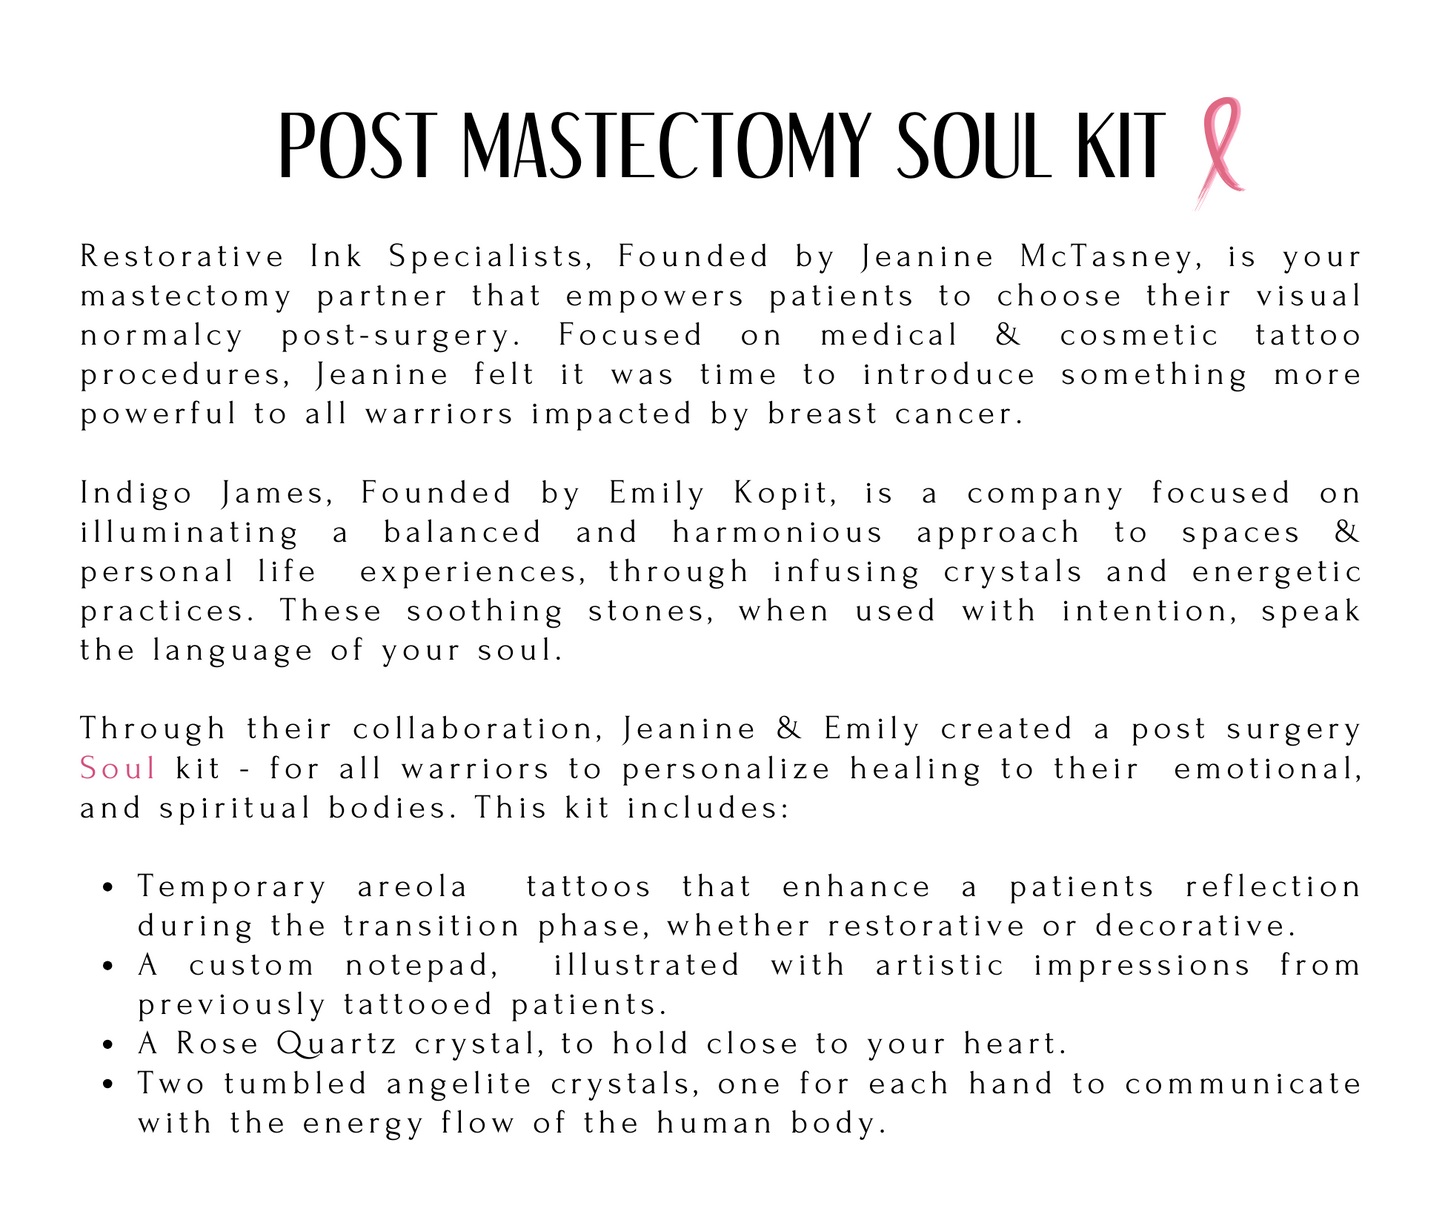 Post Mastctomy care kit, FOR THE SOUL